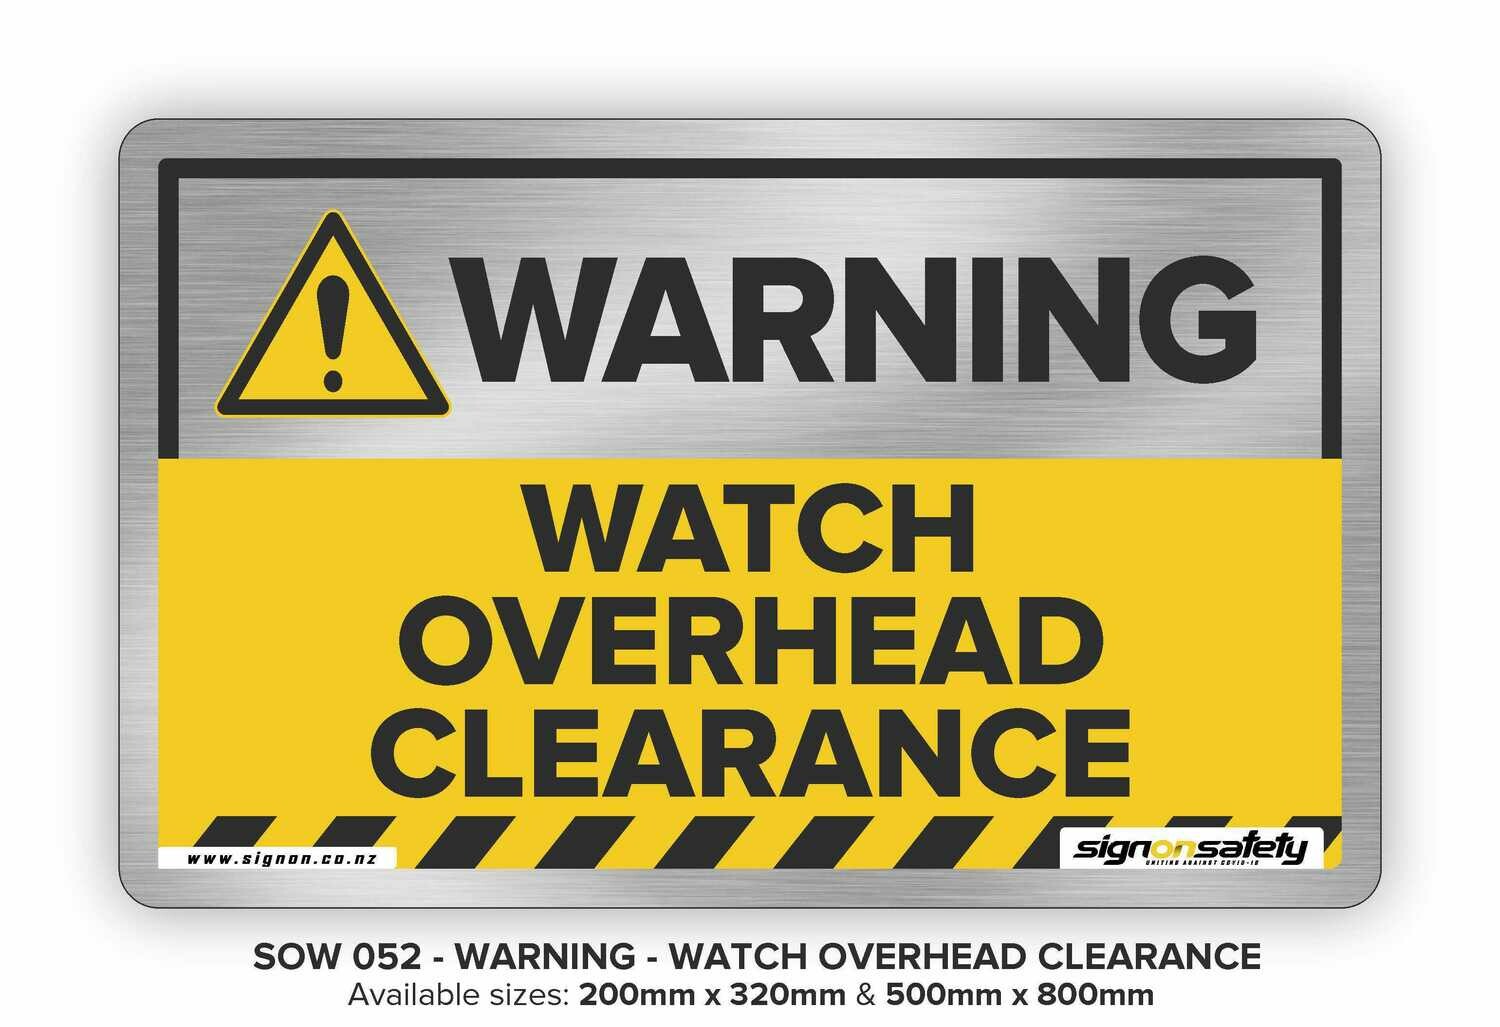 Warning - Watch Overhead Clearance